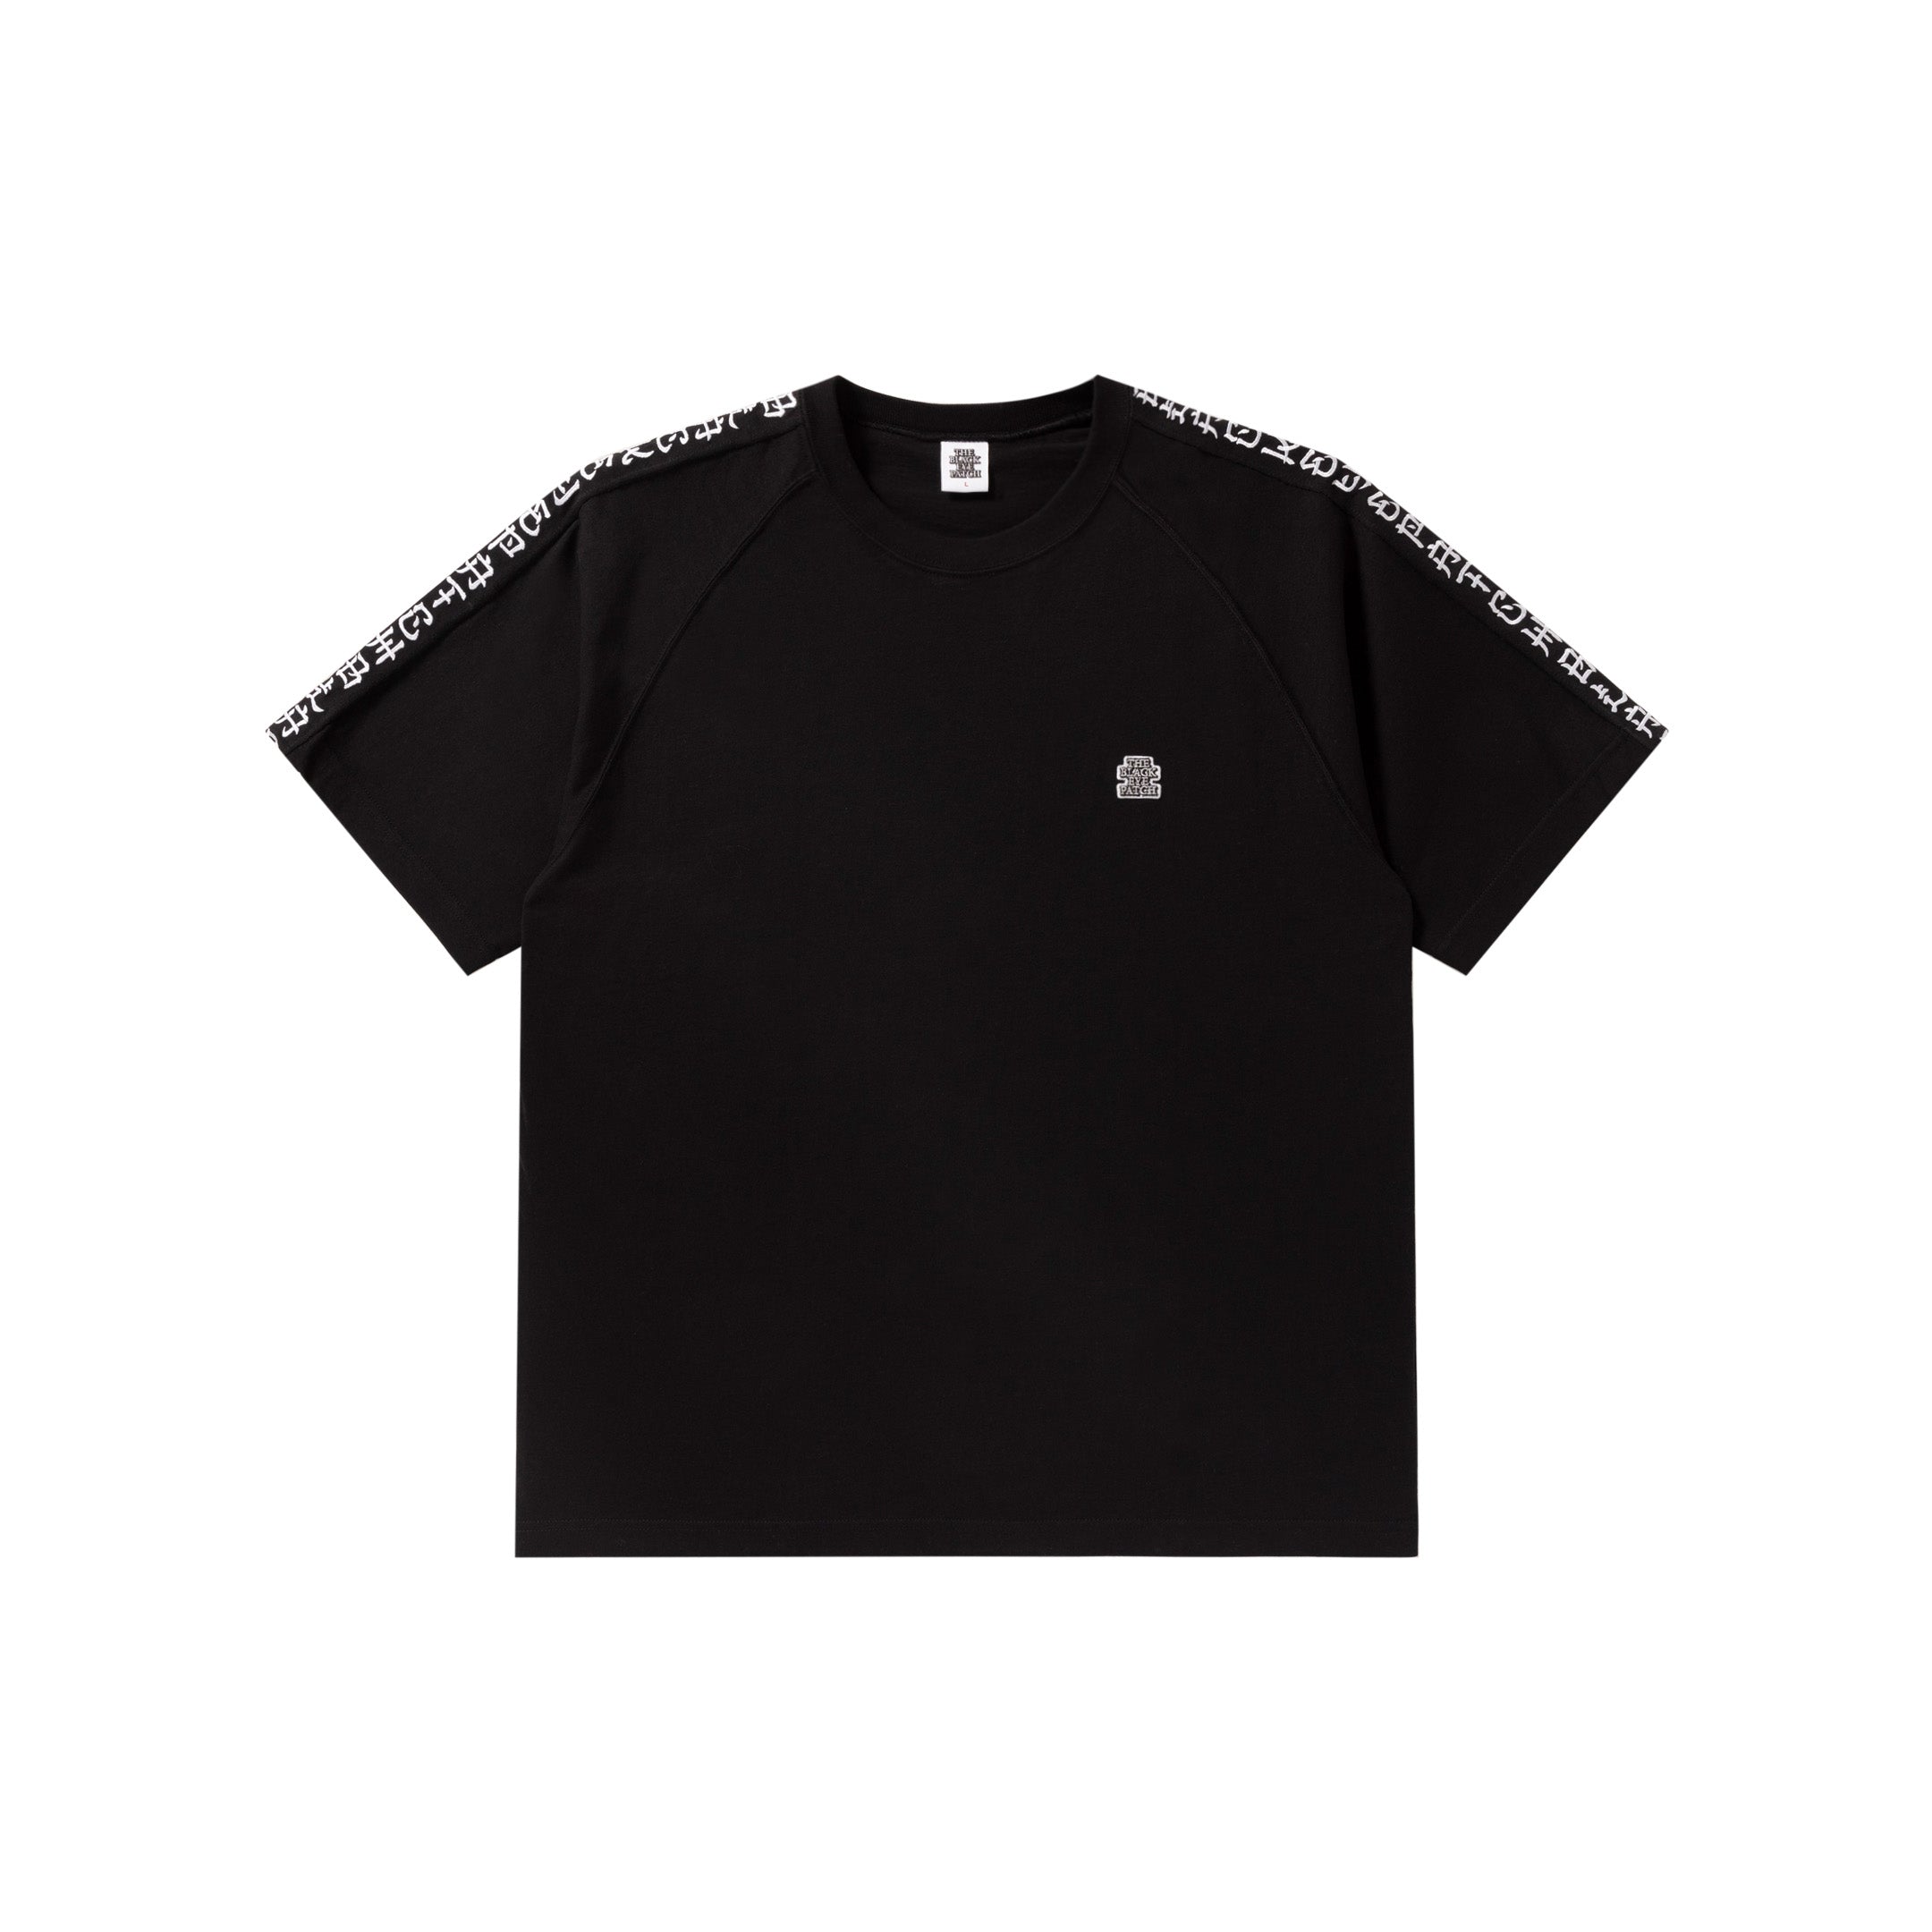 Tシャツ – BlackEyePatch